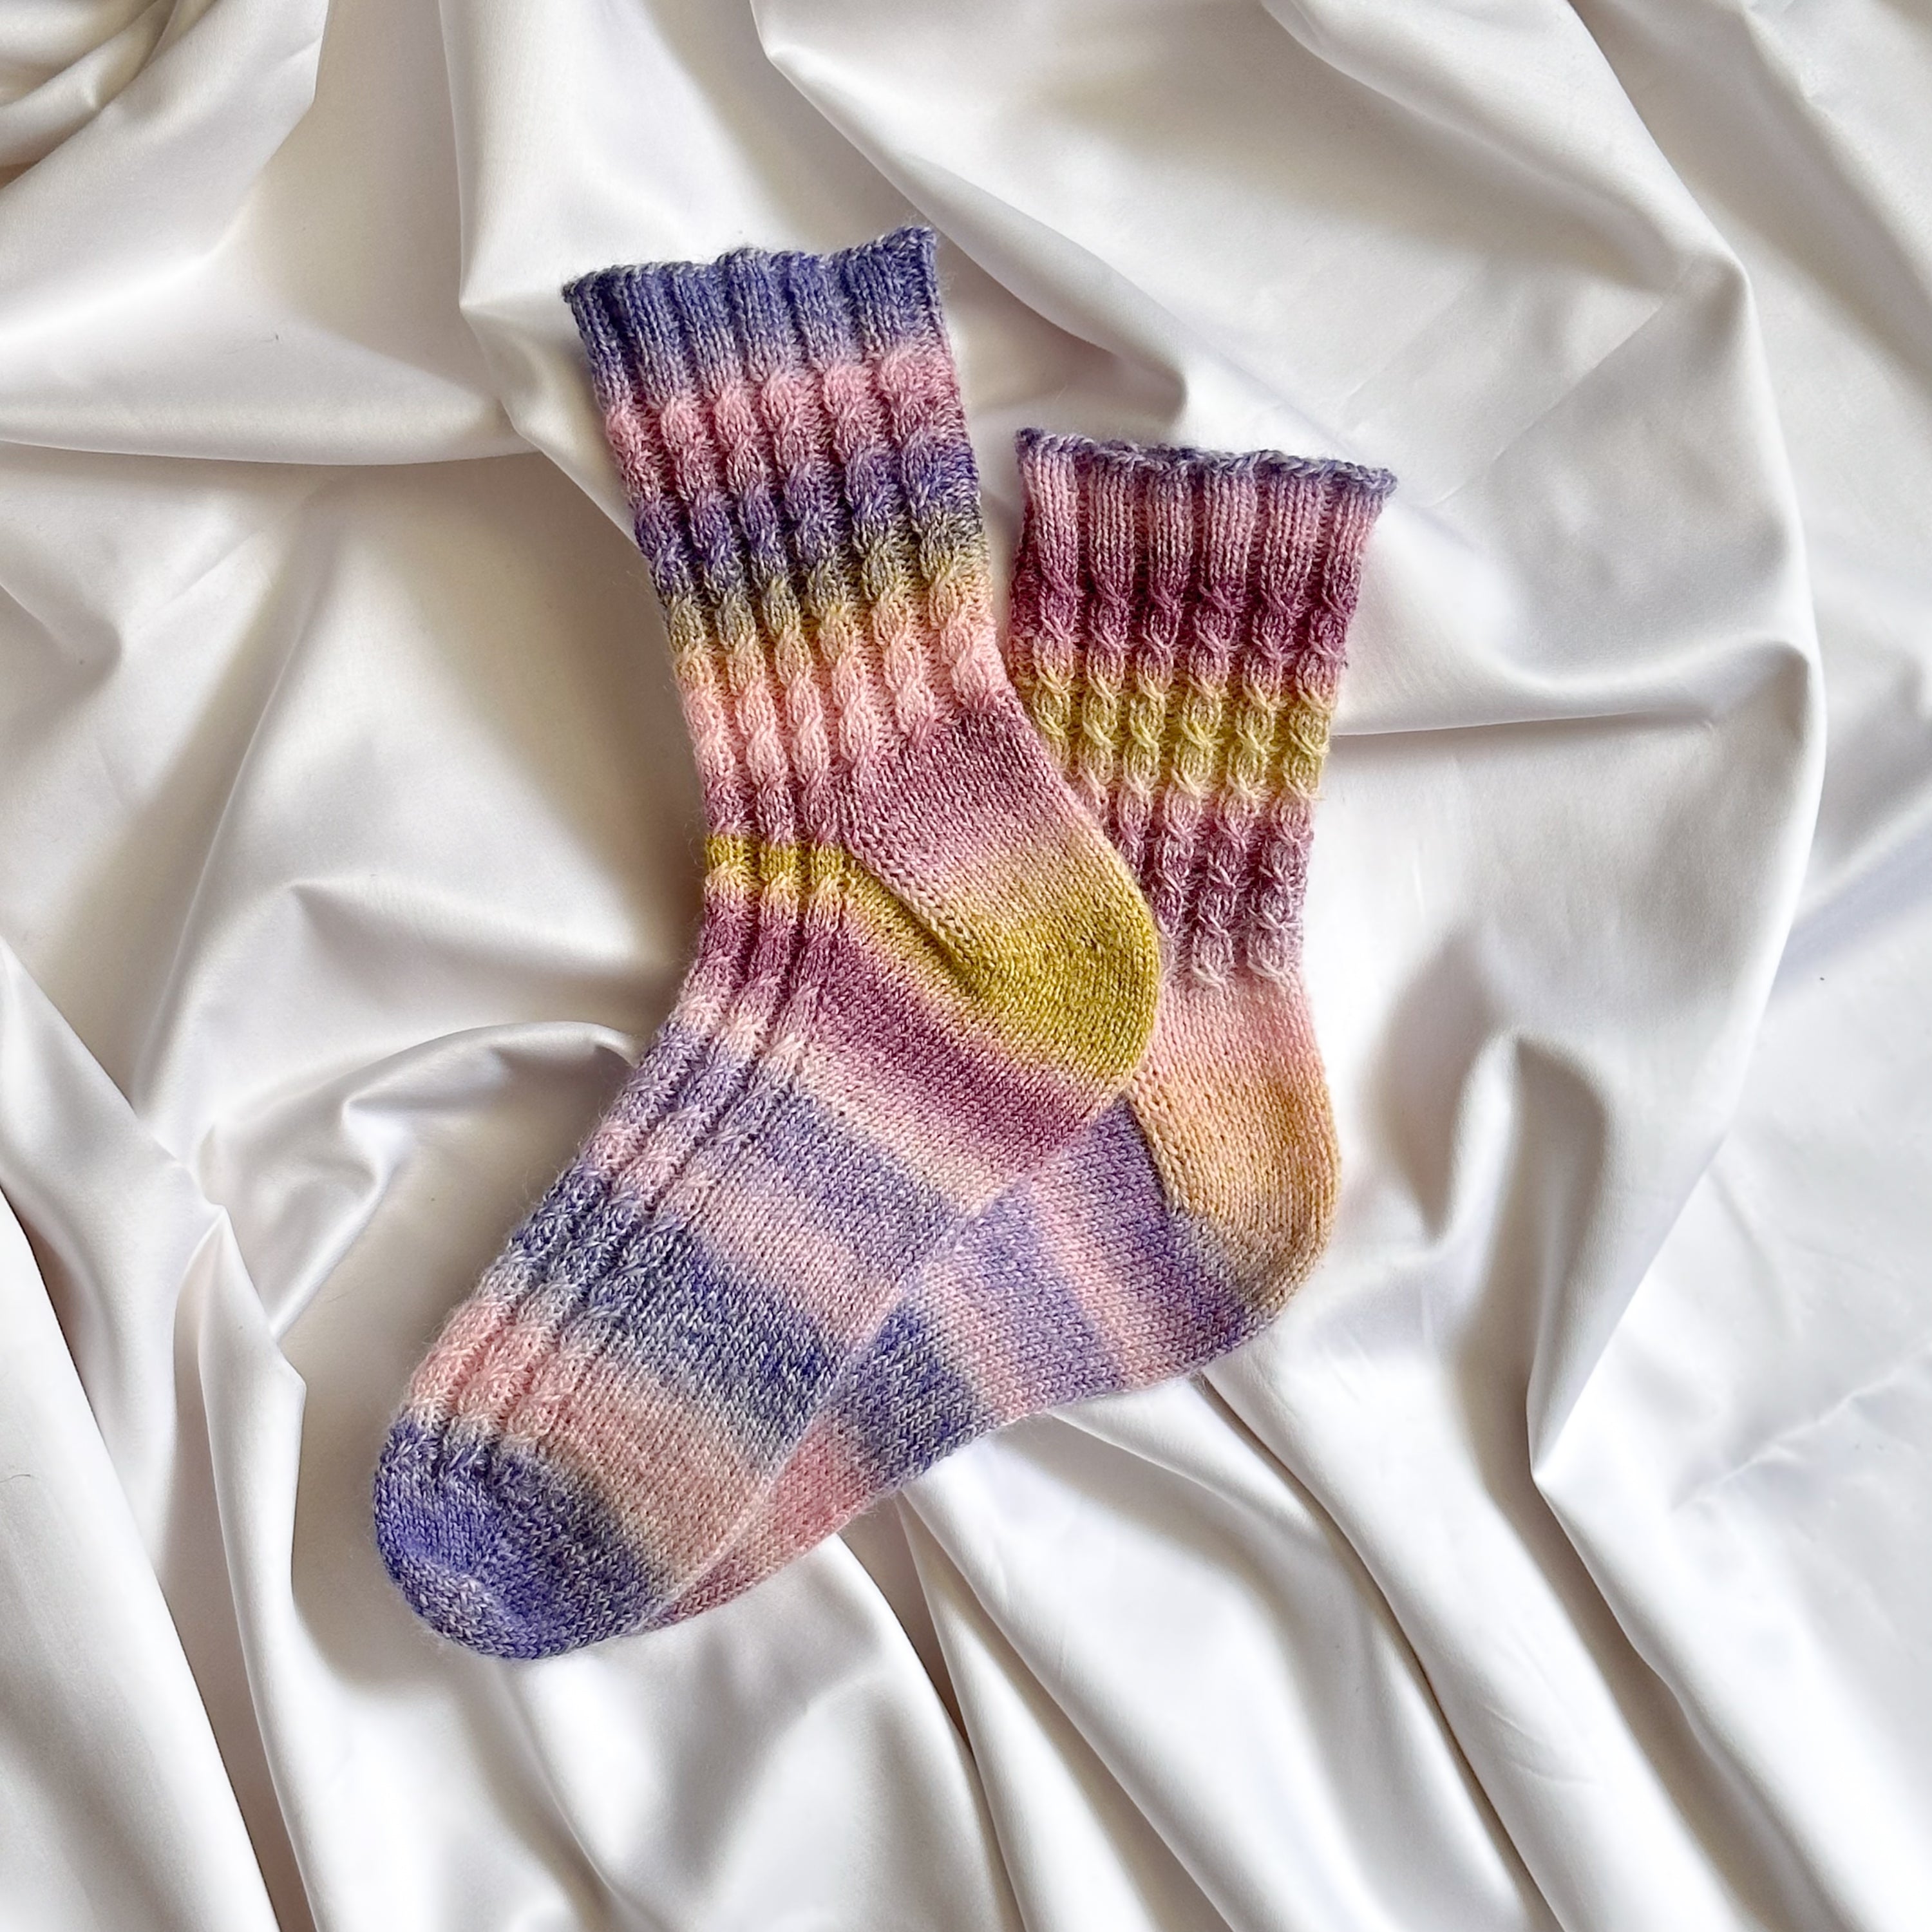 Curonian Socks